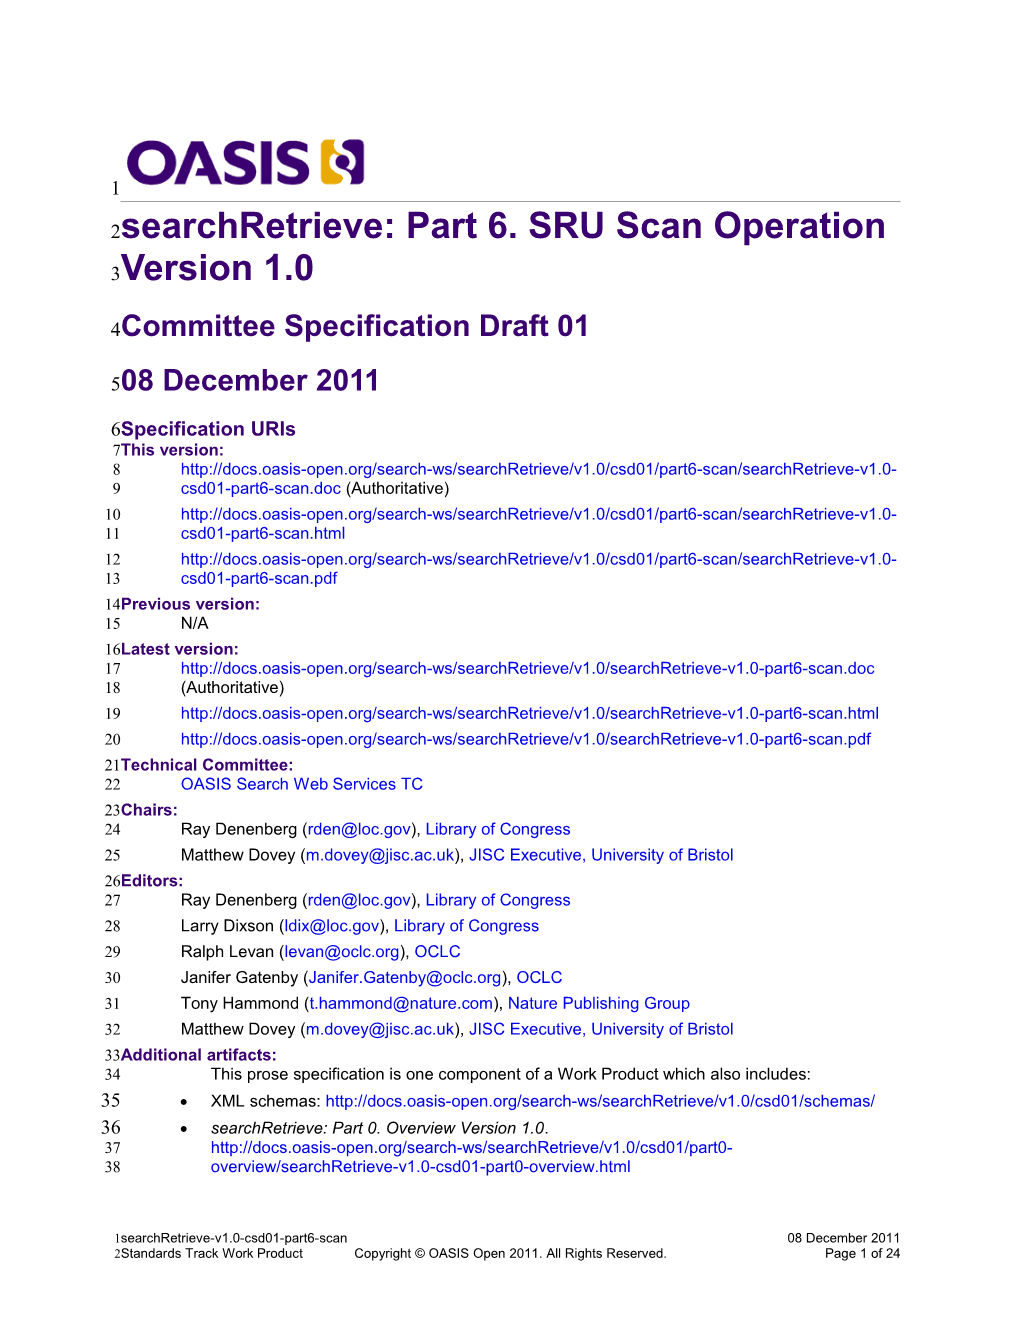 Searchretrieve: Part 6. SRU Scan Operation